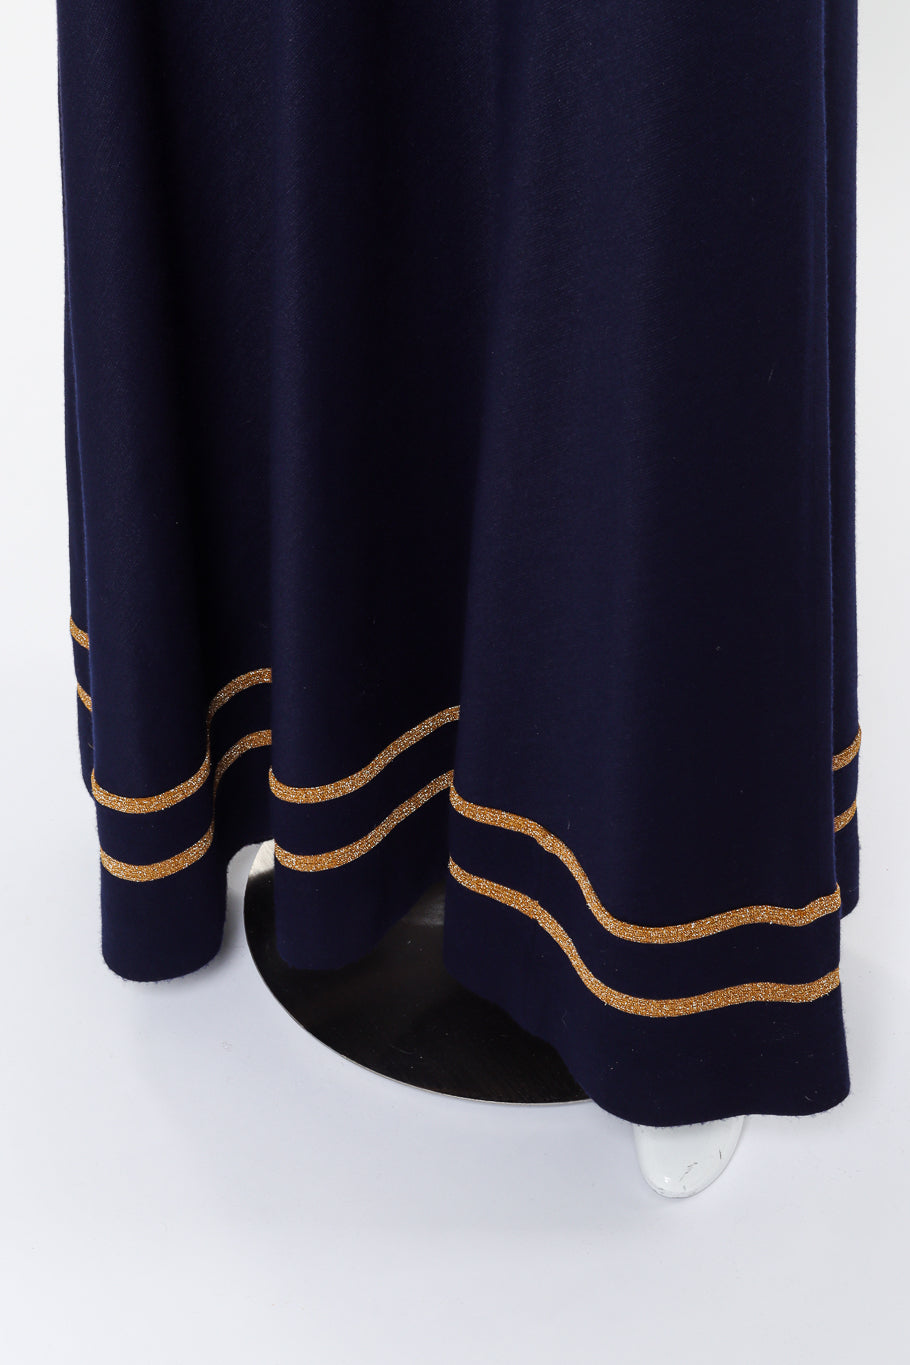 Vintage Lillie Rubin Metallic Stripe Knit Dress bottom hem on mannequin @recess la